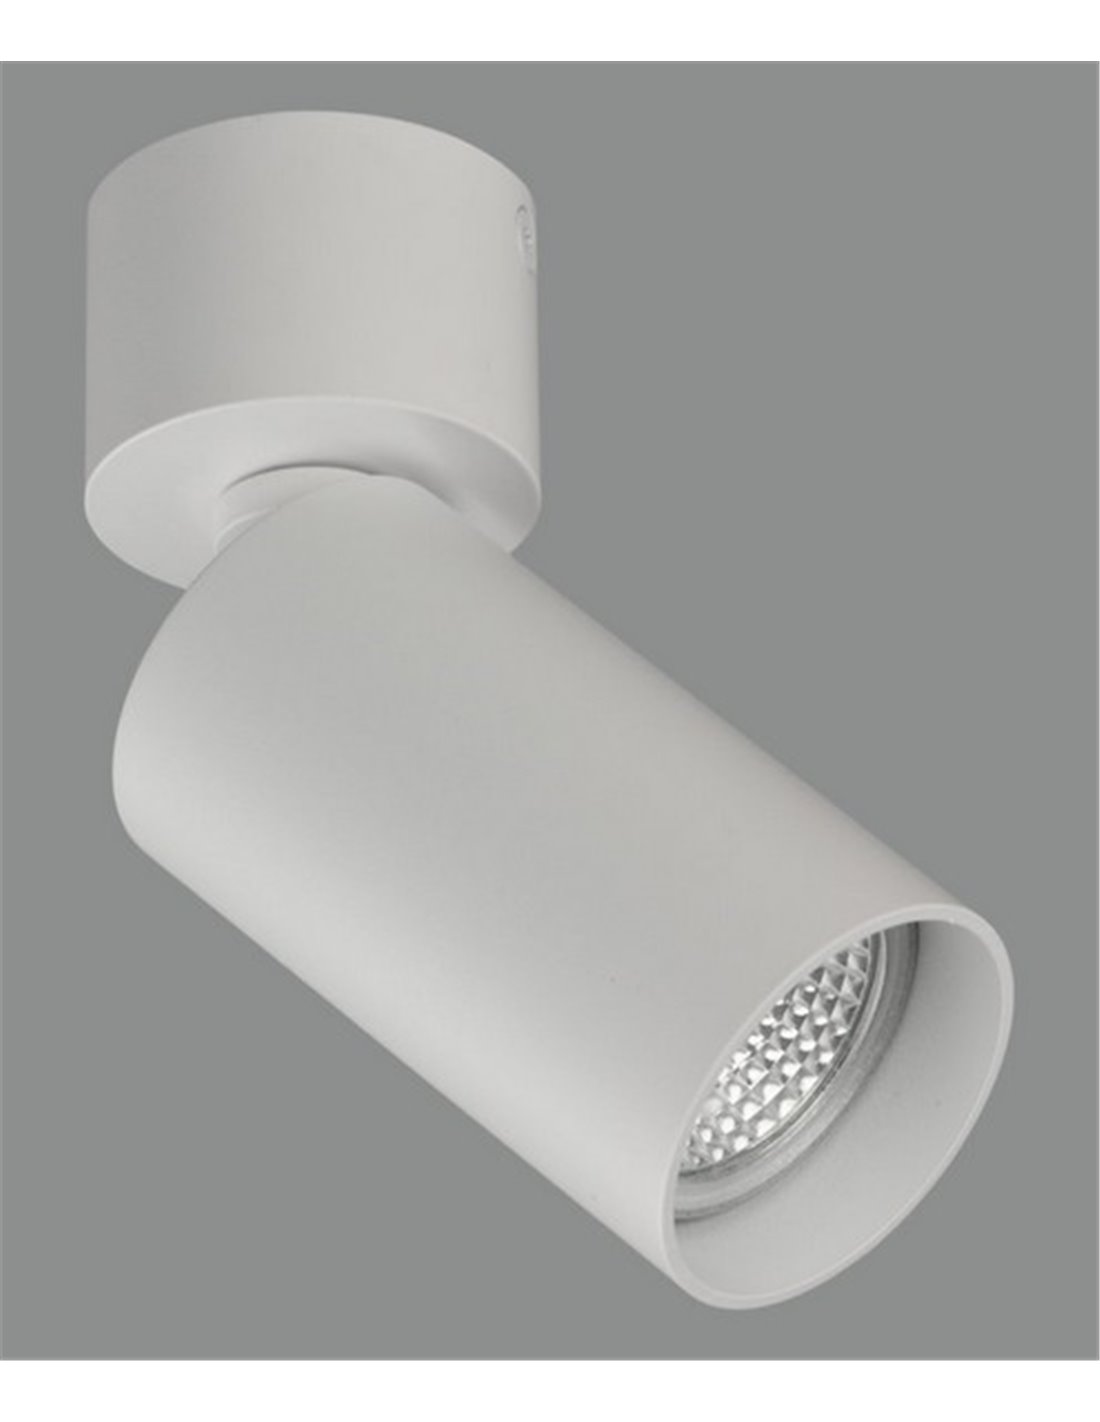 Spot plafonnier à LED Tube 12cm - ACB Iluminacion